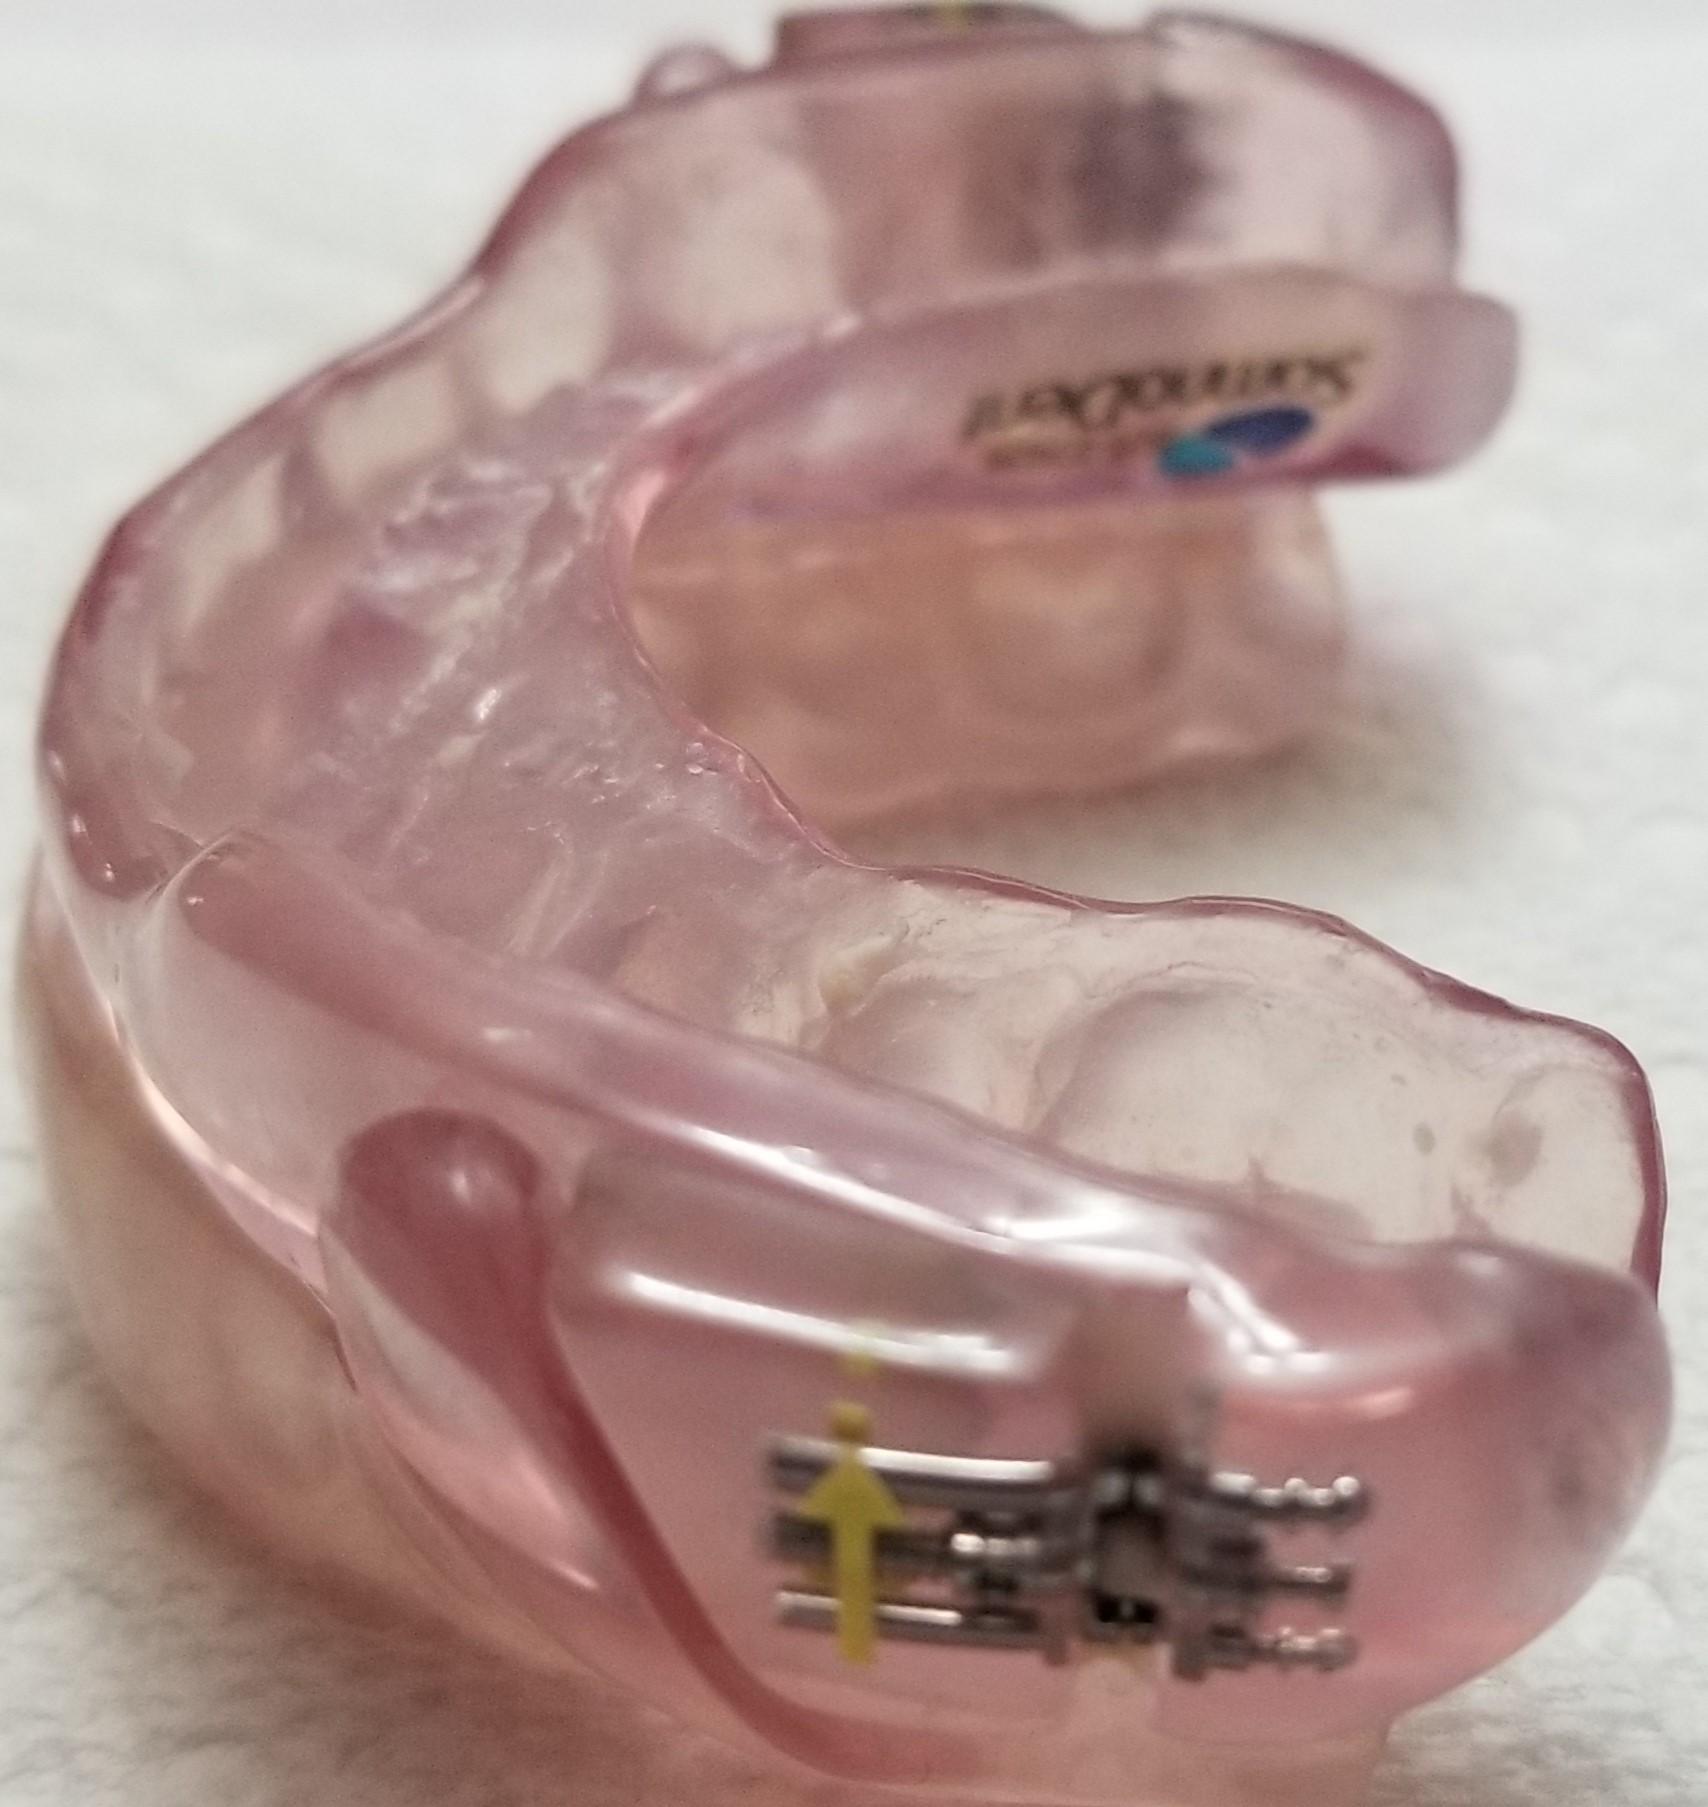 Dental device 3 of 3.jpg